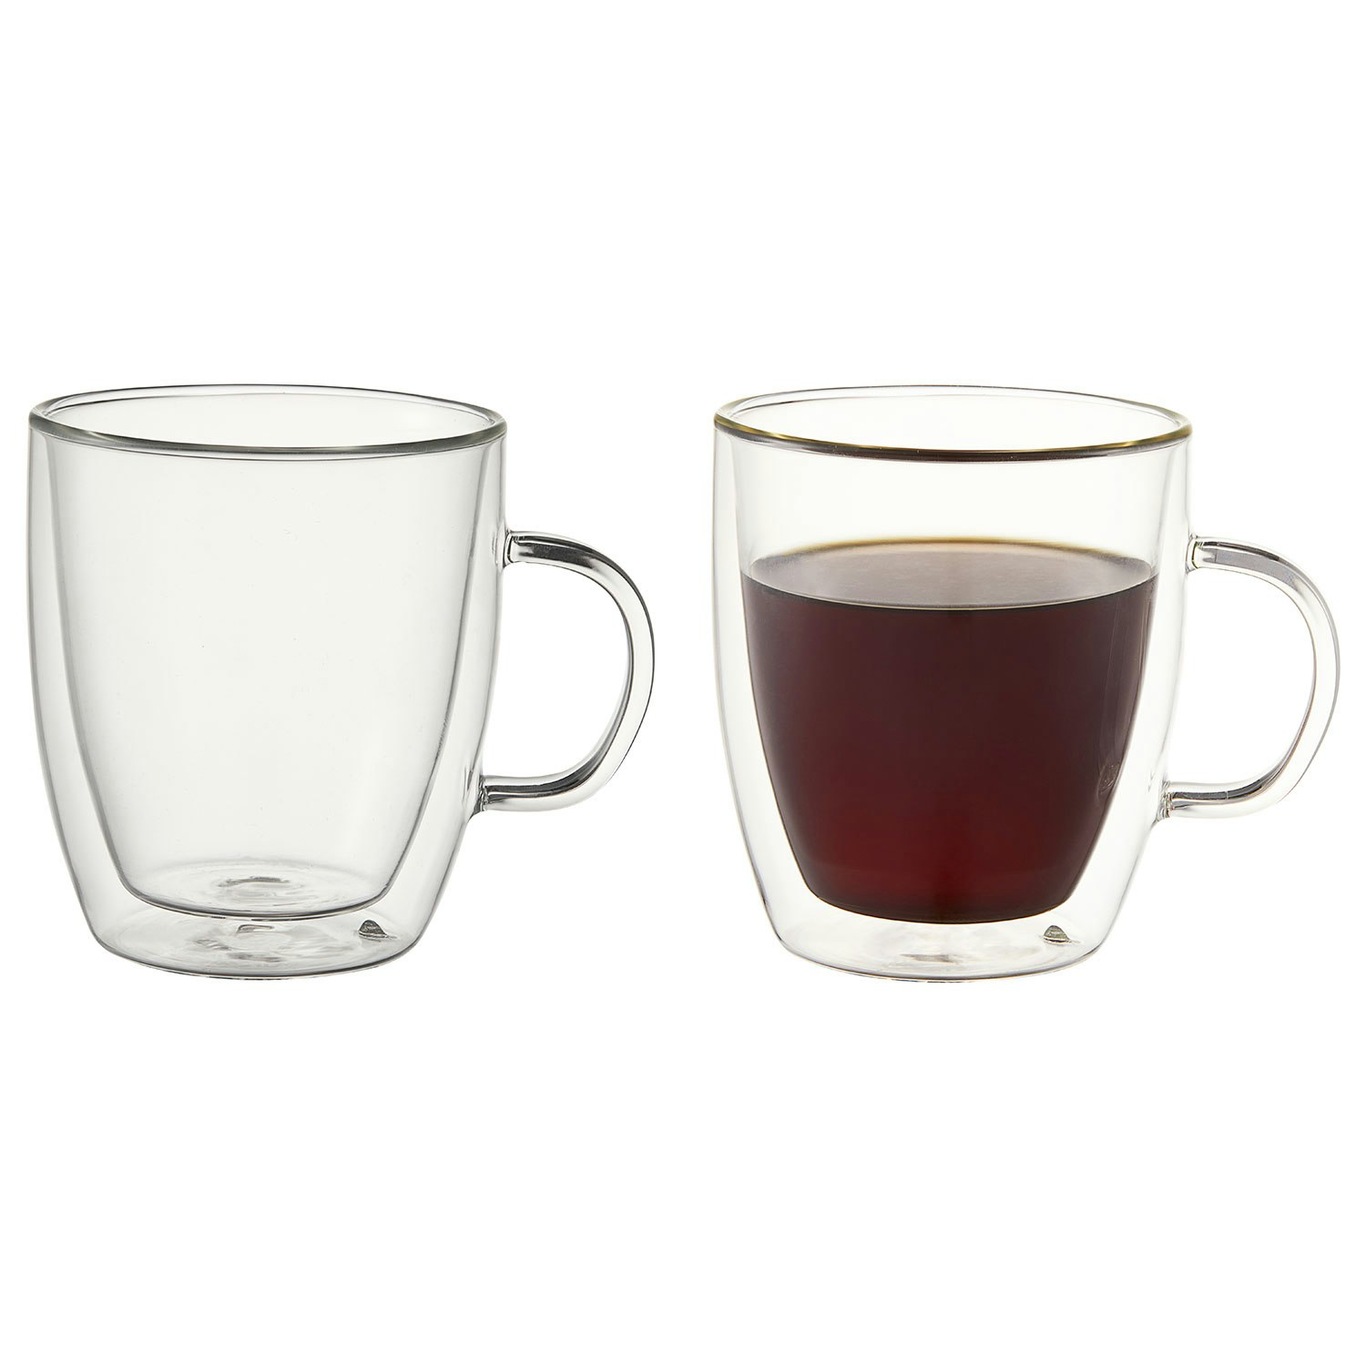 https://royaldesign.com/image/2/dorre-kirk-coffee-cups-2-pack-0?w=800&quality=80